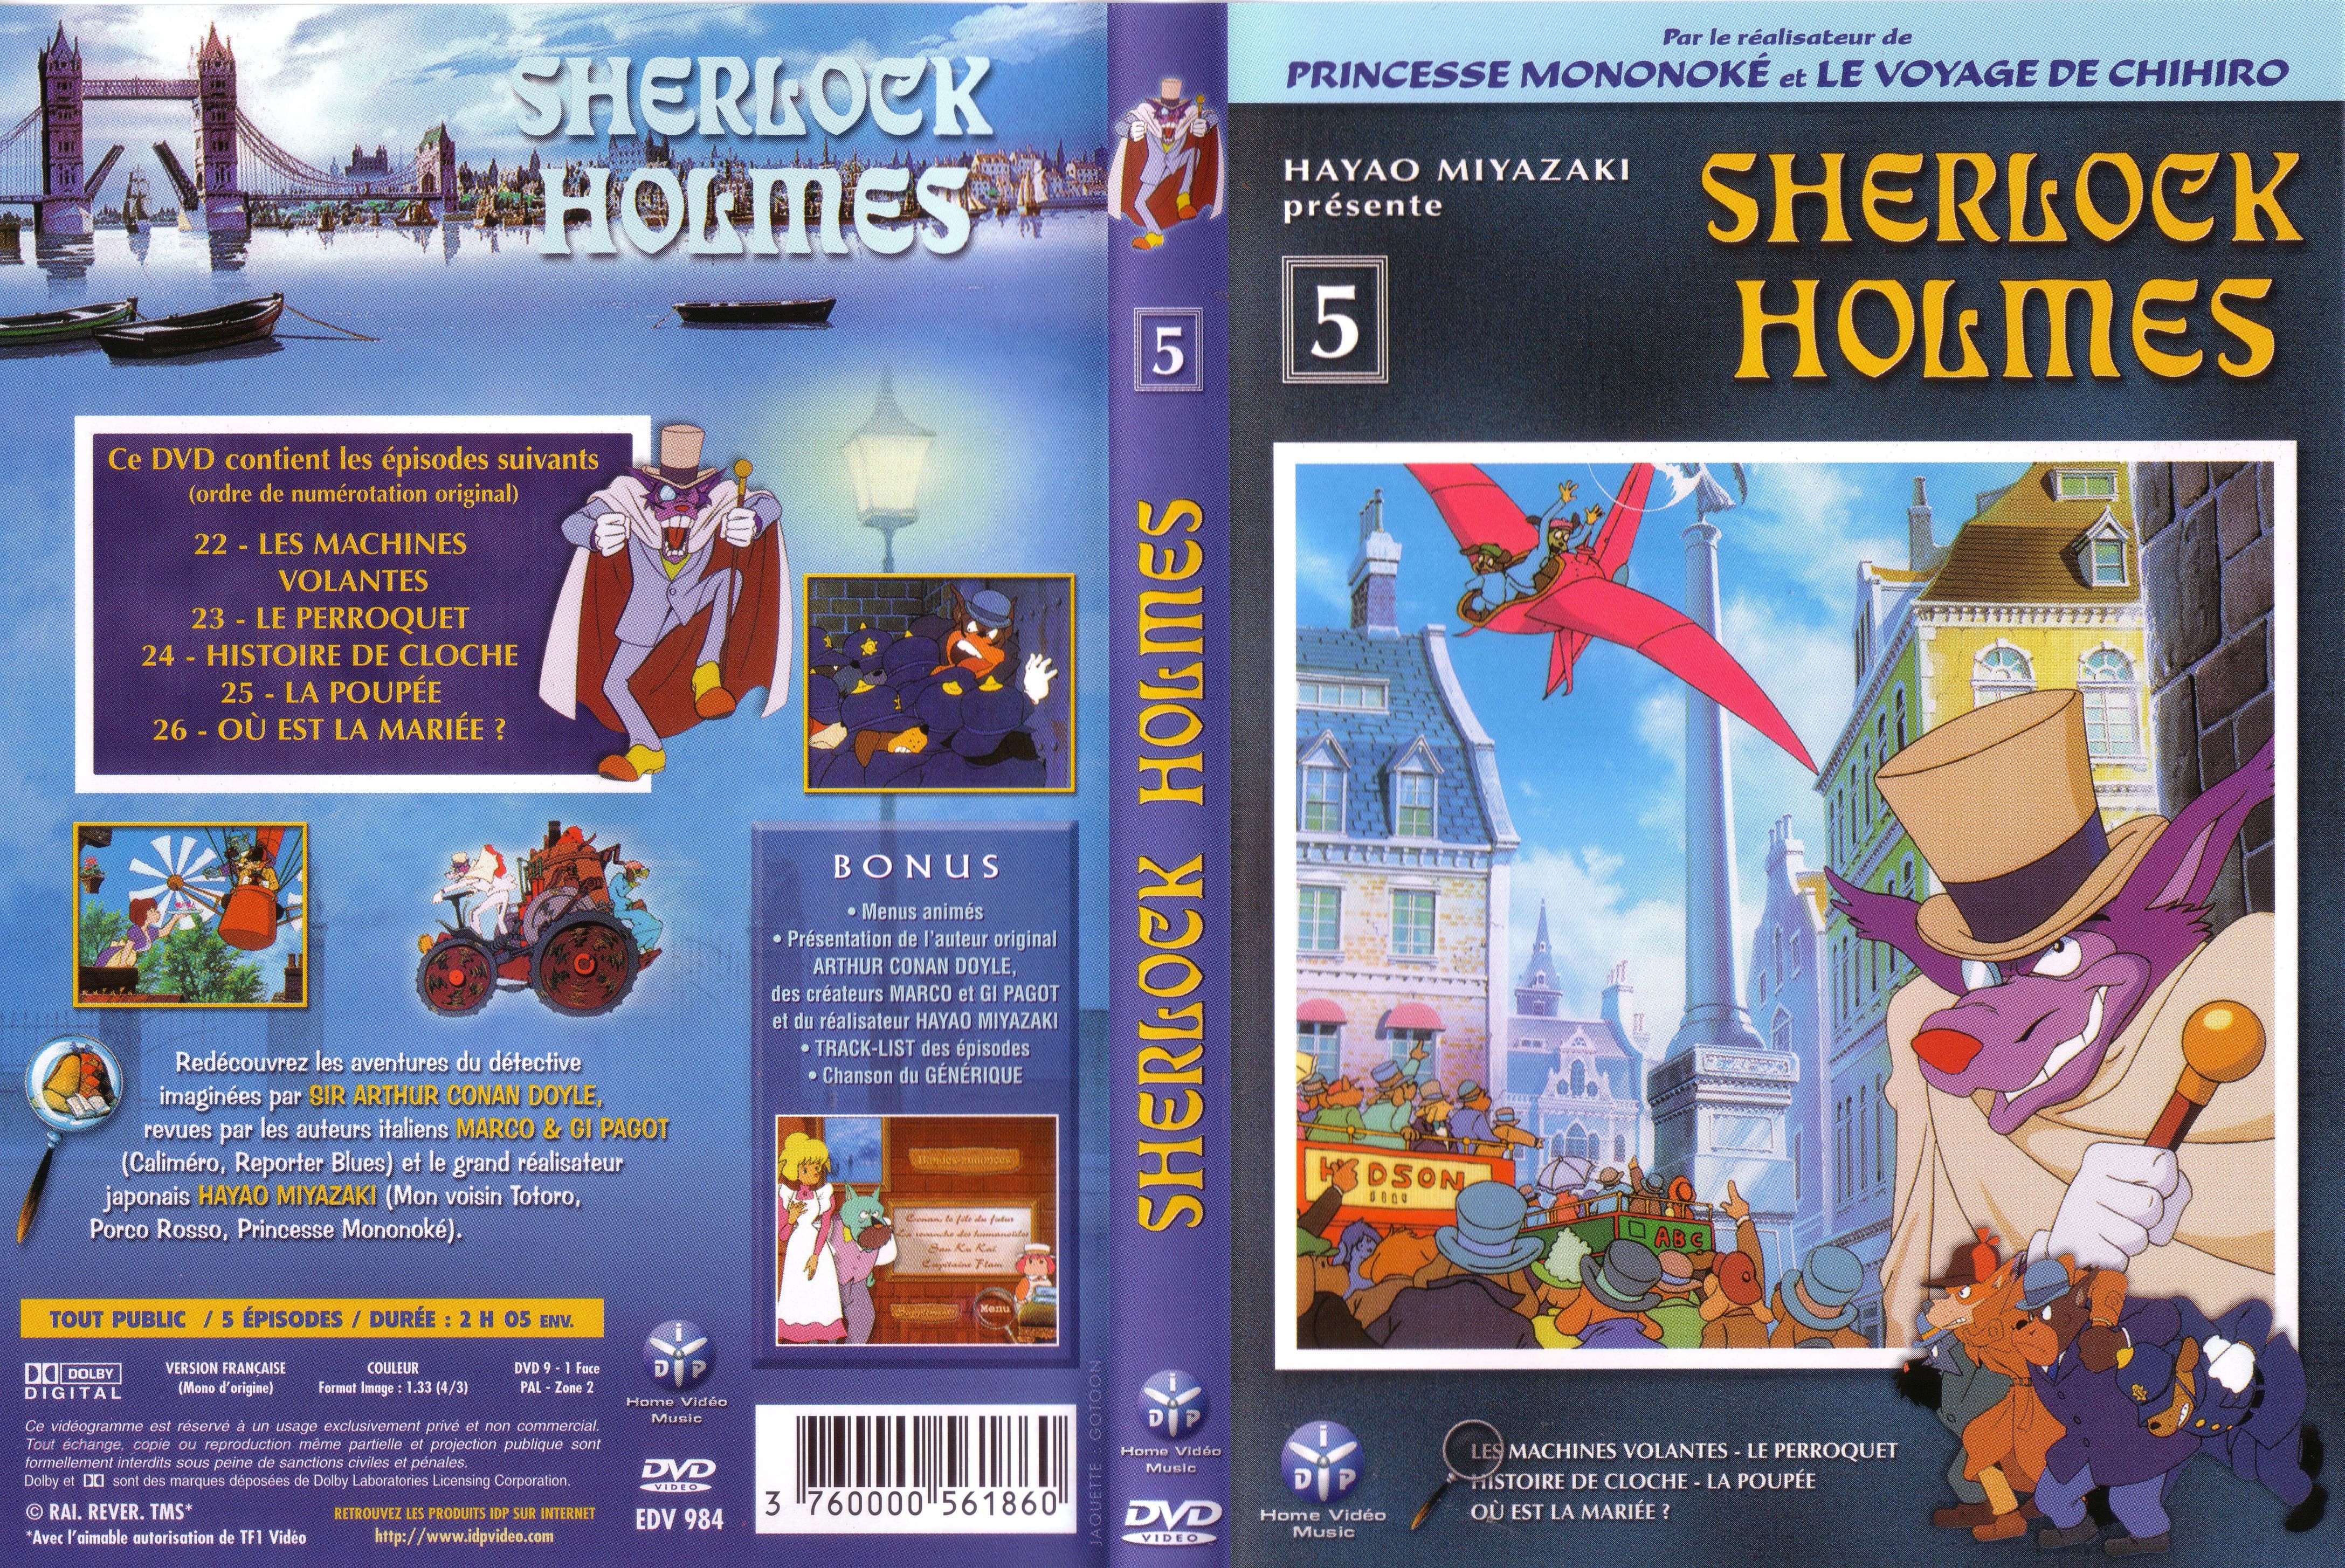 Jaquette DVD Sherlock Holmes vol 5